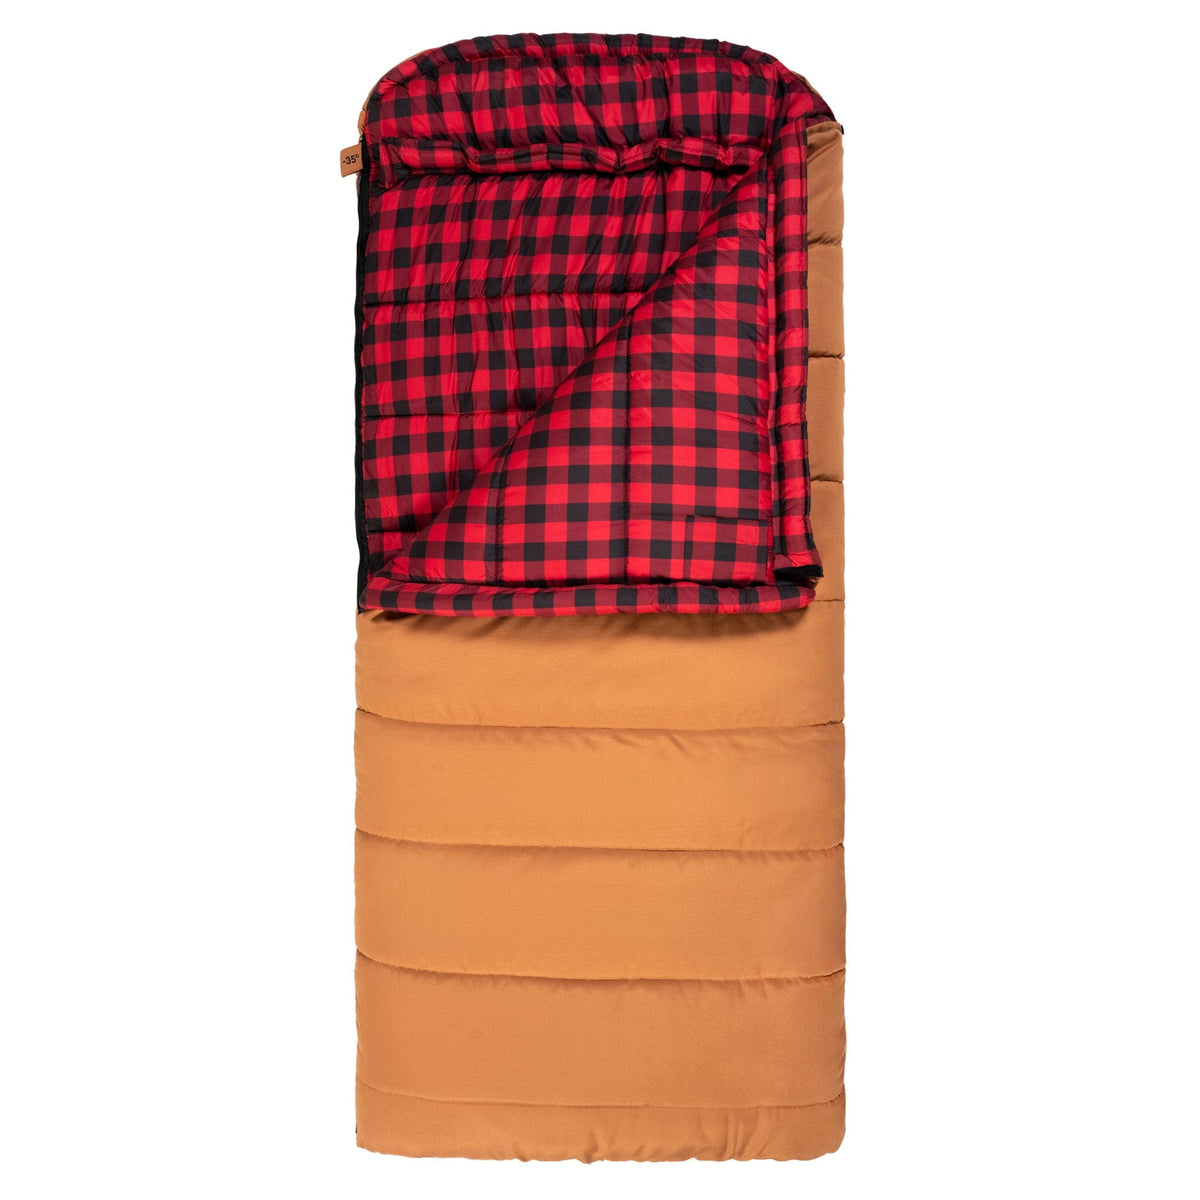 TETON Sports Bridger -35˚F Canvas Sleeping Bag with Cotton Flannel Lining 10111